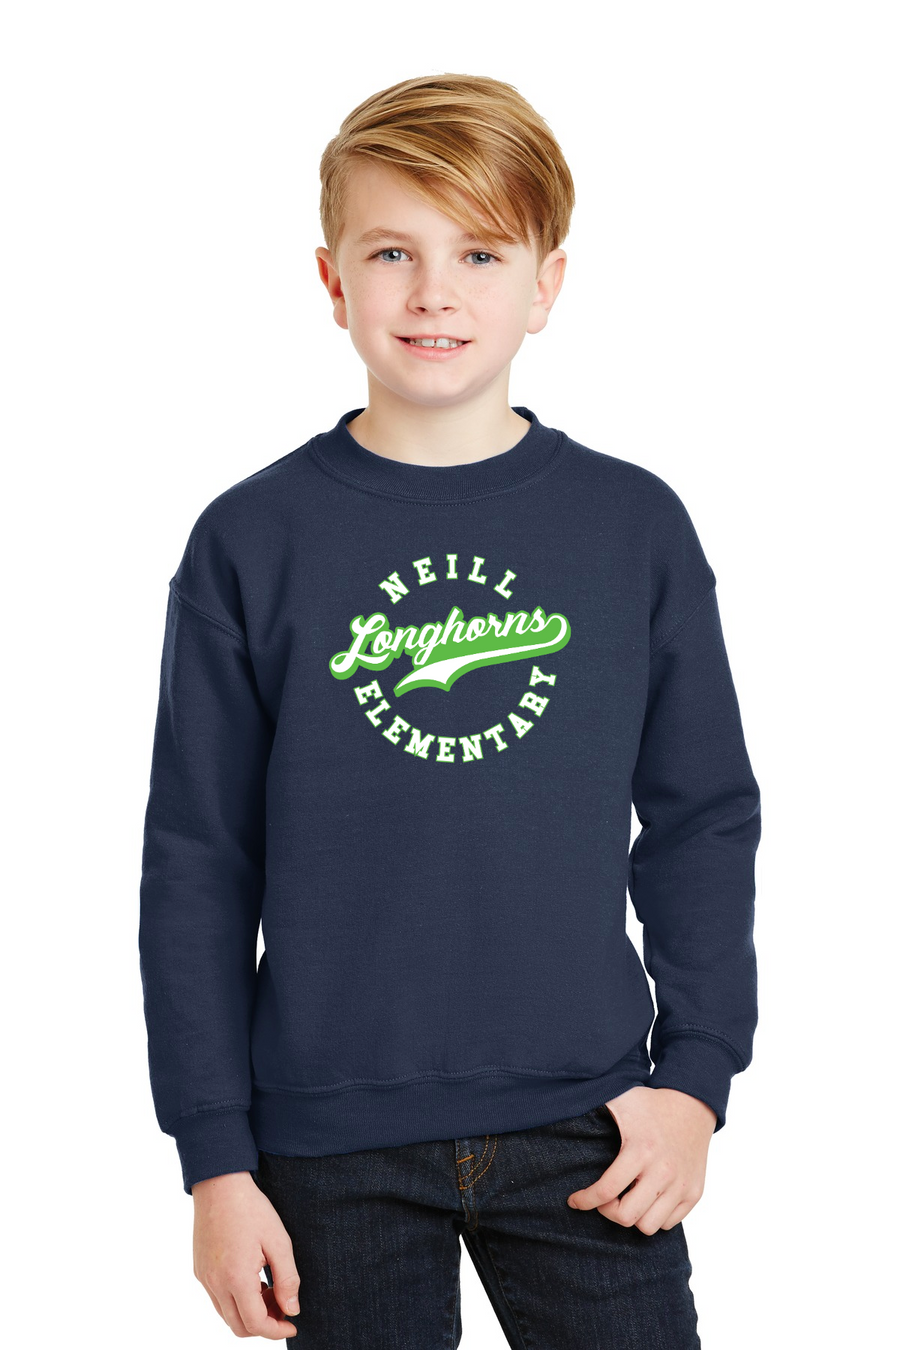 Neill Elementary Spirit Wear 2023/24 On-Demand-Unisex Crewneck Sweatshirt Lime Logo